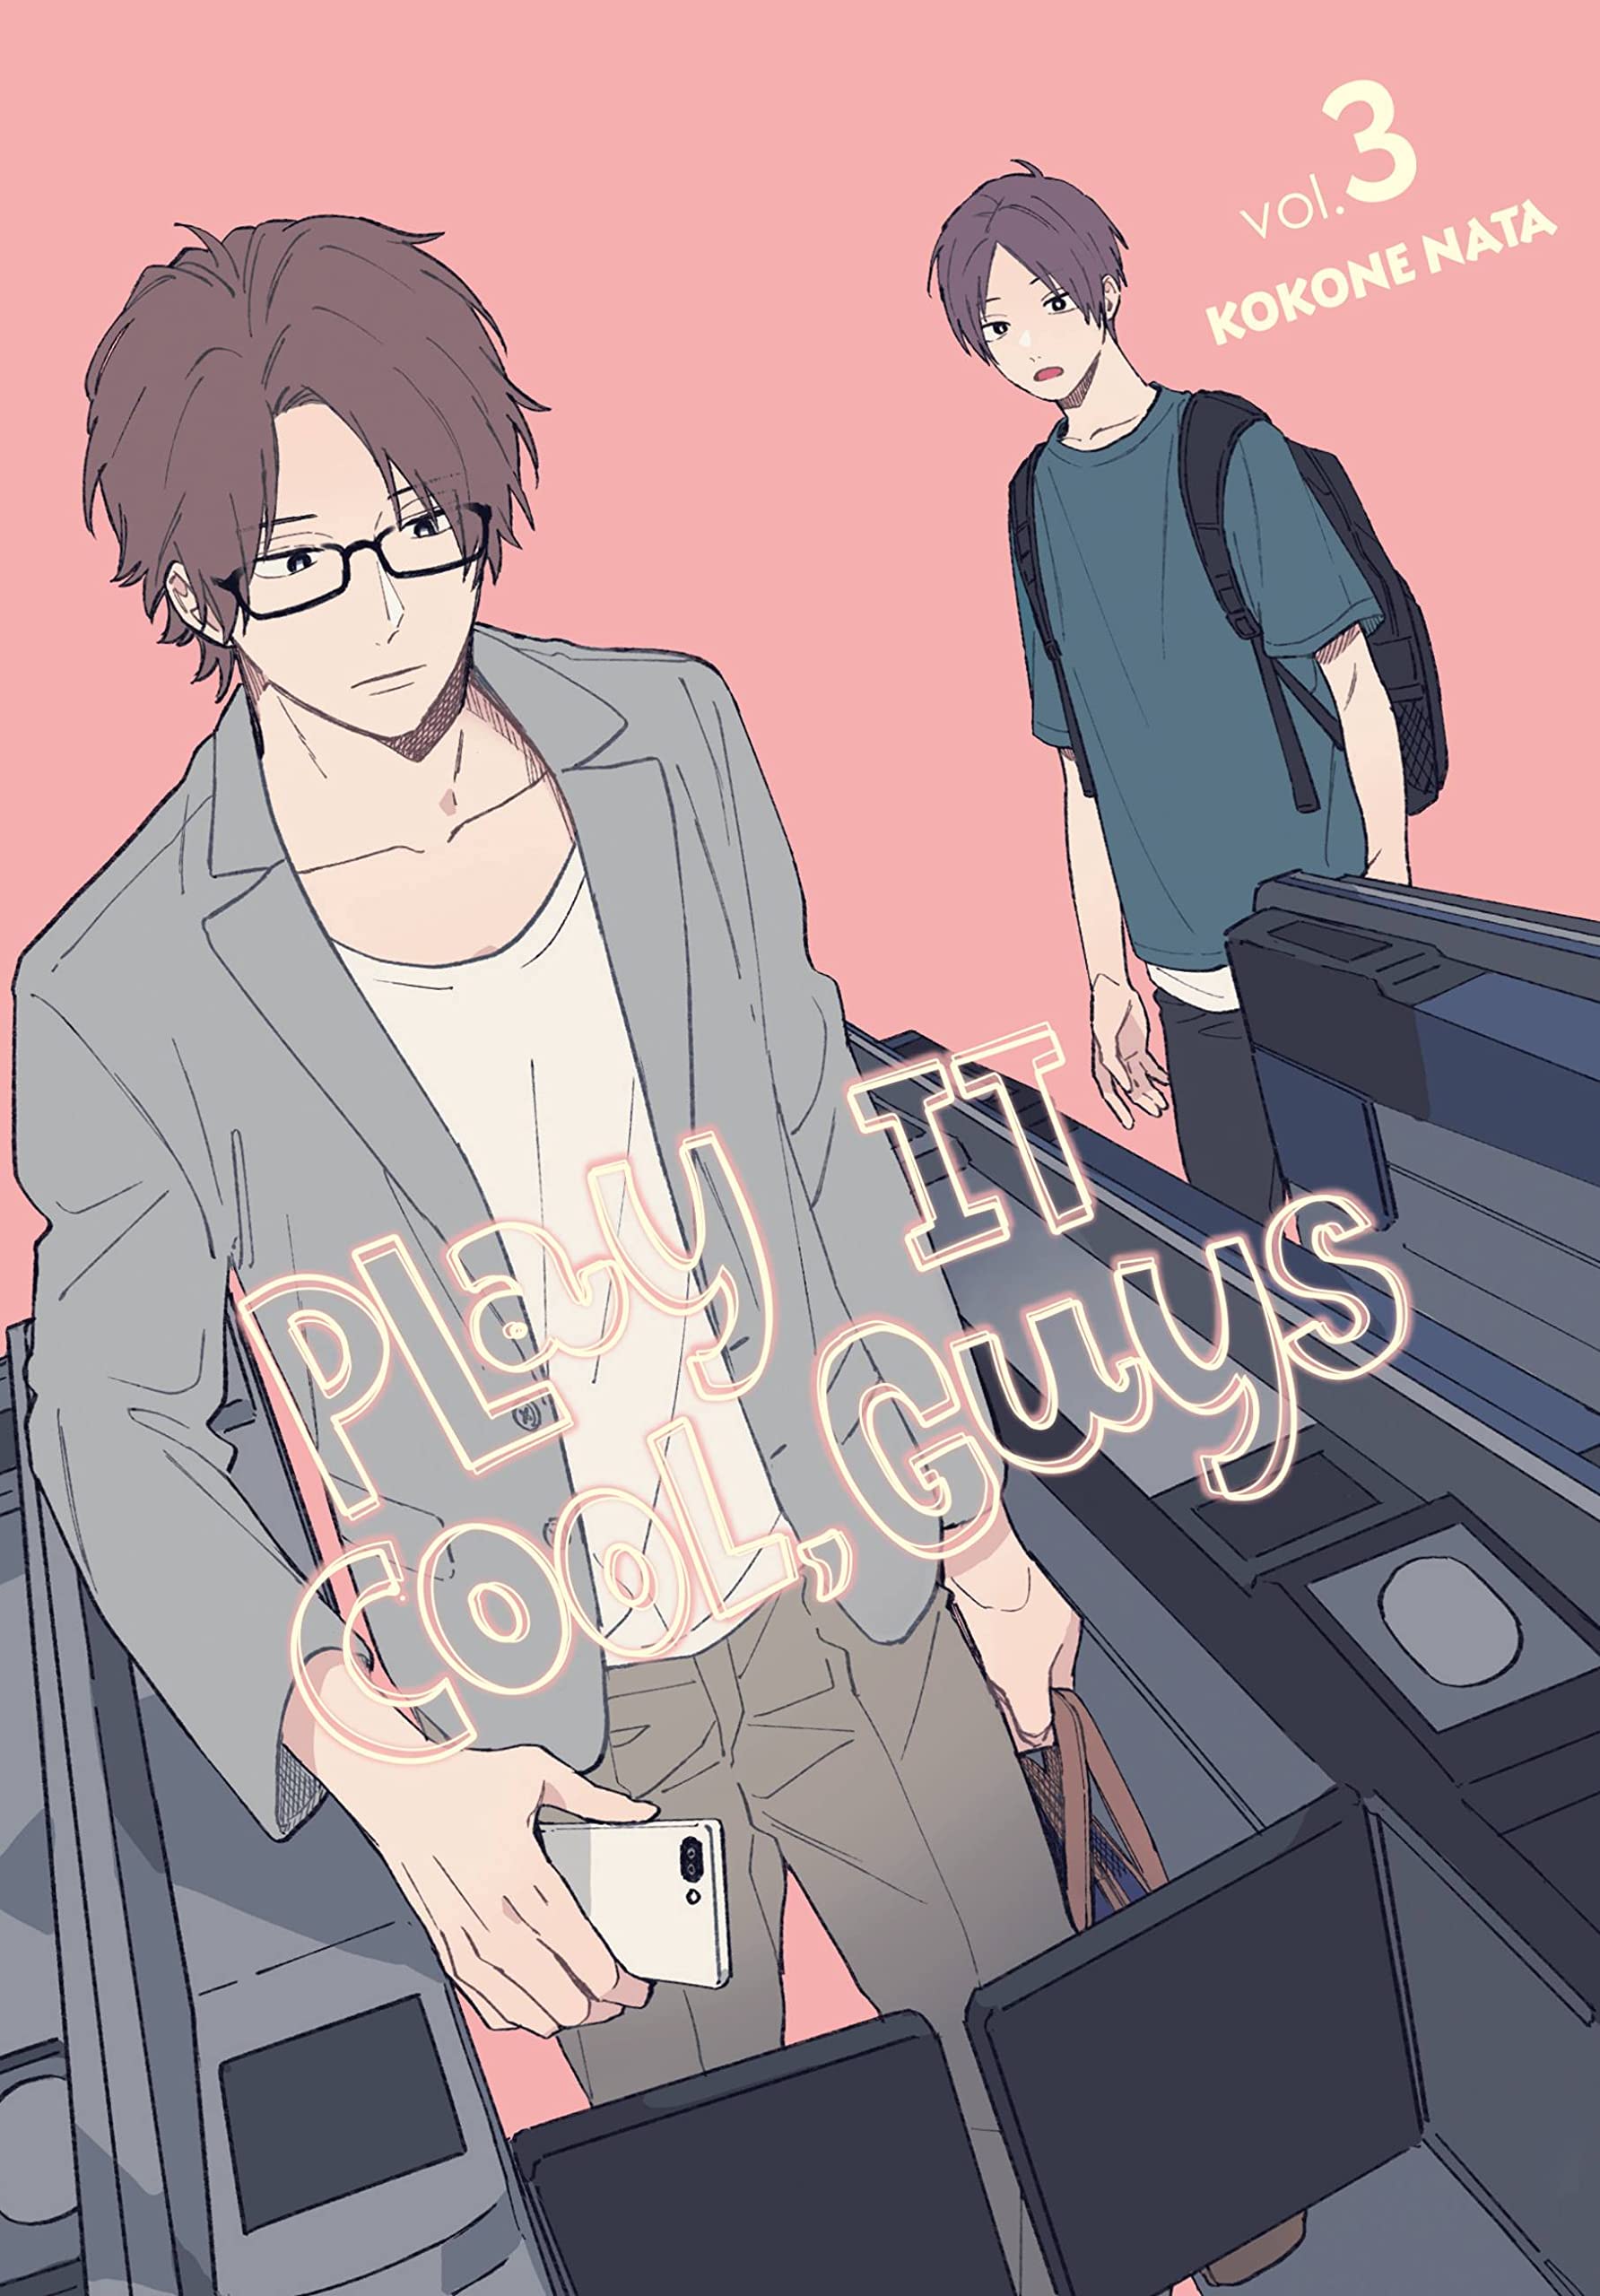 Play It Cool, Guys Comedy Manga Gets TV Anime Adaptation